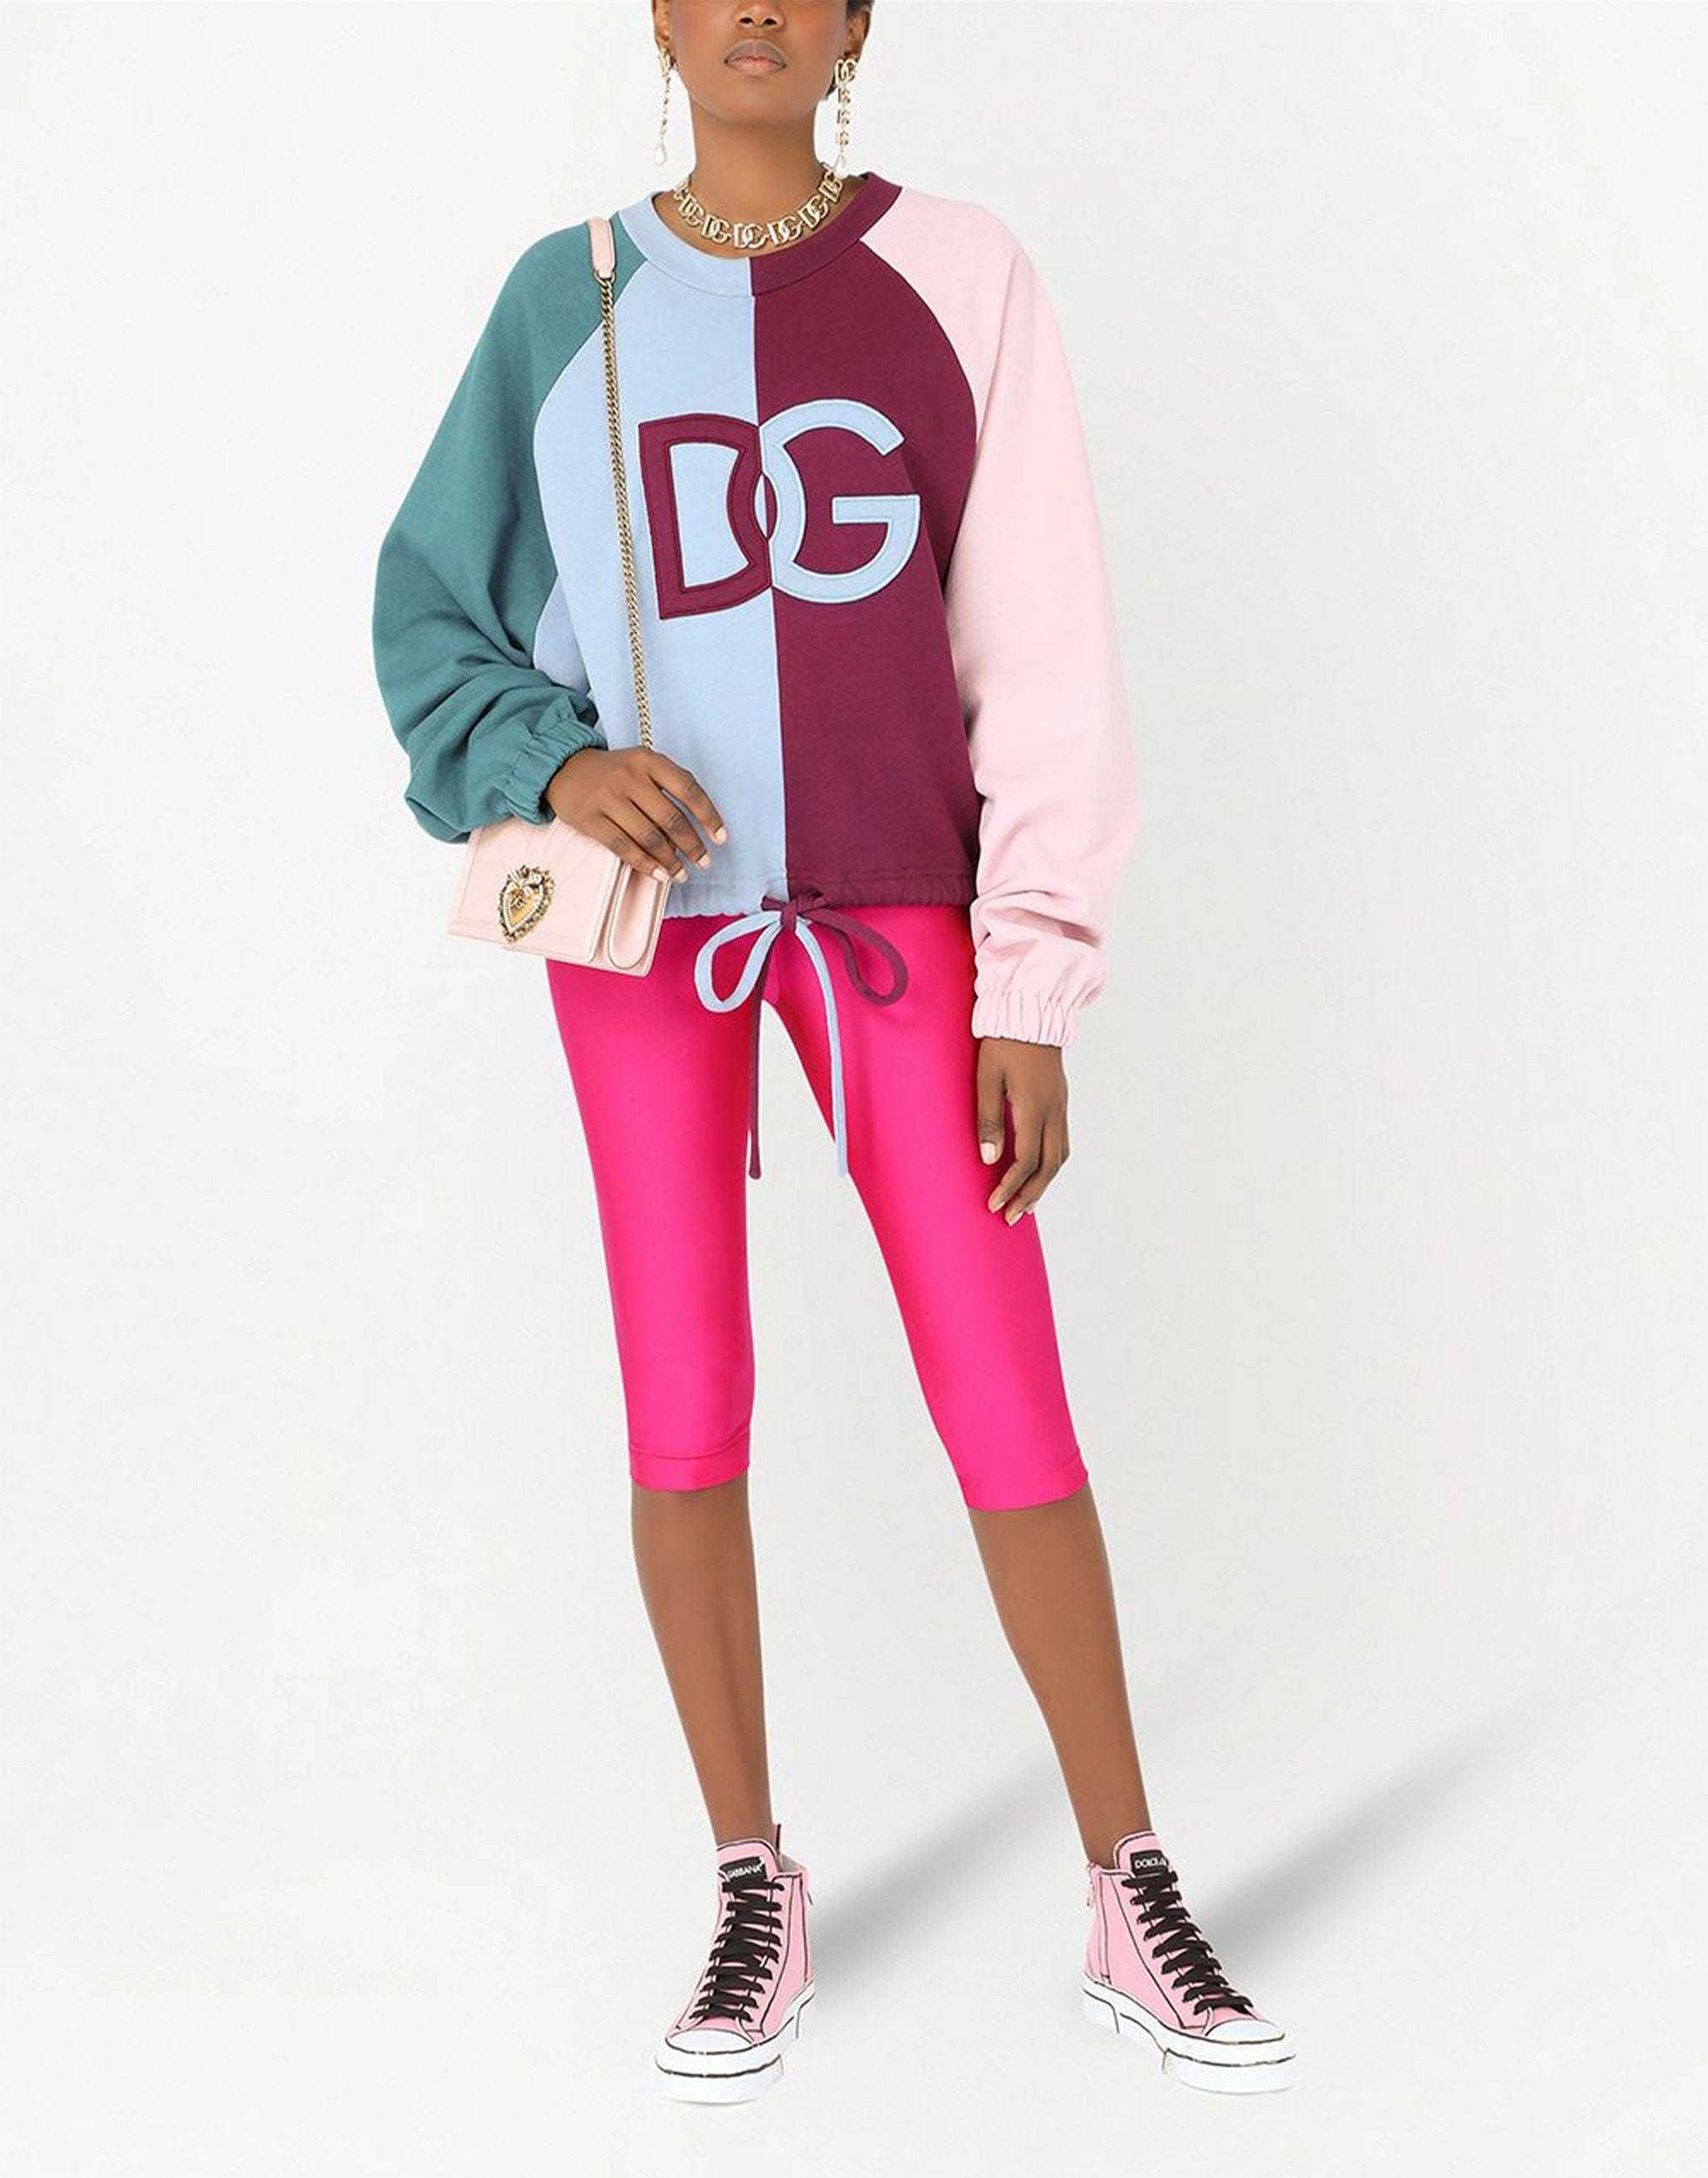 Dolce & Gabbana Jersey Patchwork Sweatshirt With DG Lettering